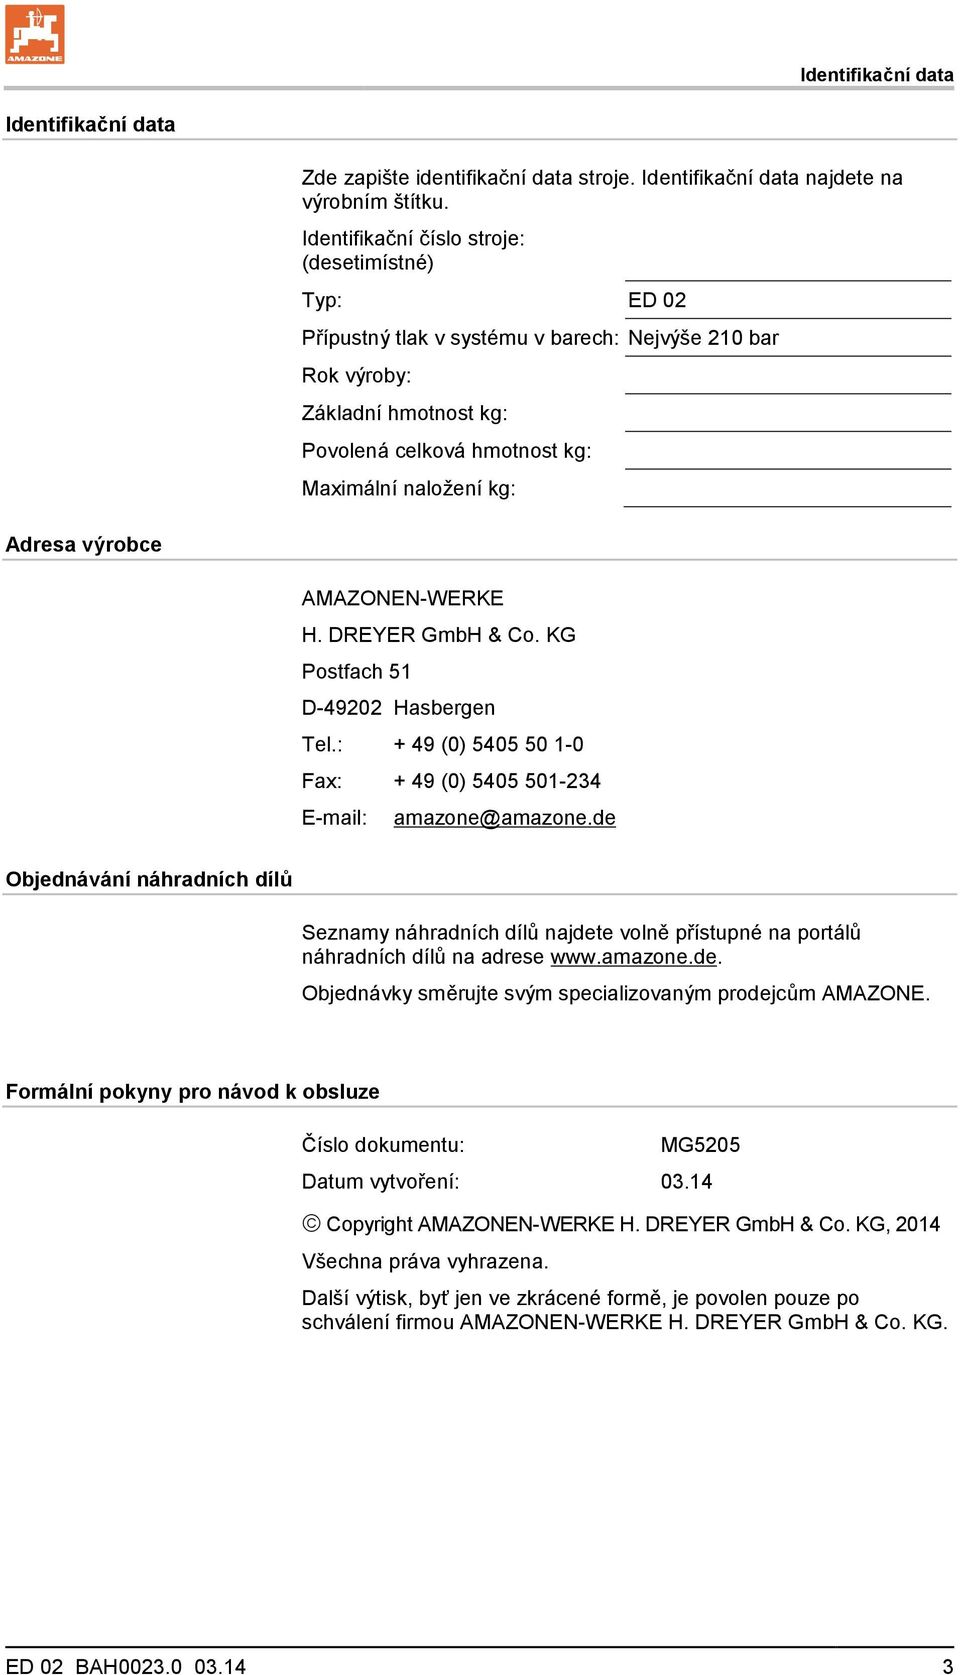 výrobce AMAZONEN-WERKE H. DREYER GmbH & Co. KG Postfach 51 D-49202 Hasbergen Tel.: + 49 (0) 5405 50 1-0 Fax: + 49 (0) 5405 501-234 E-mail: amazone@amazone.